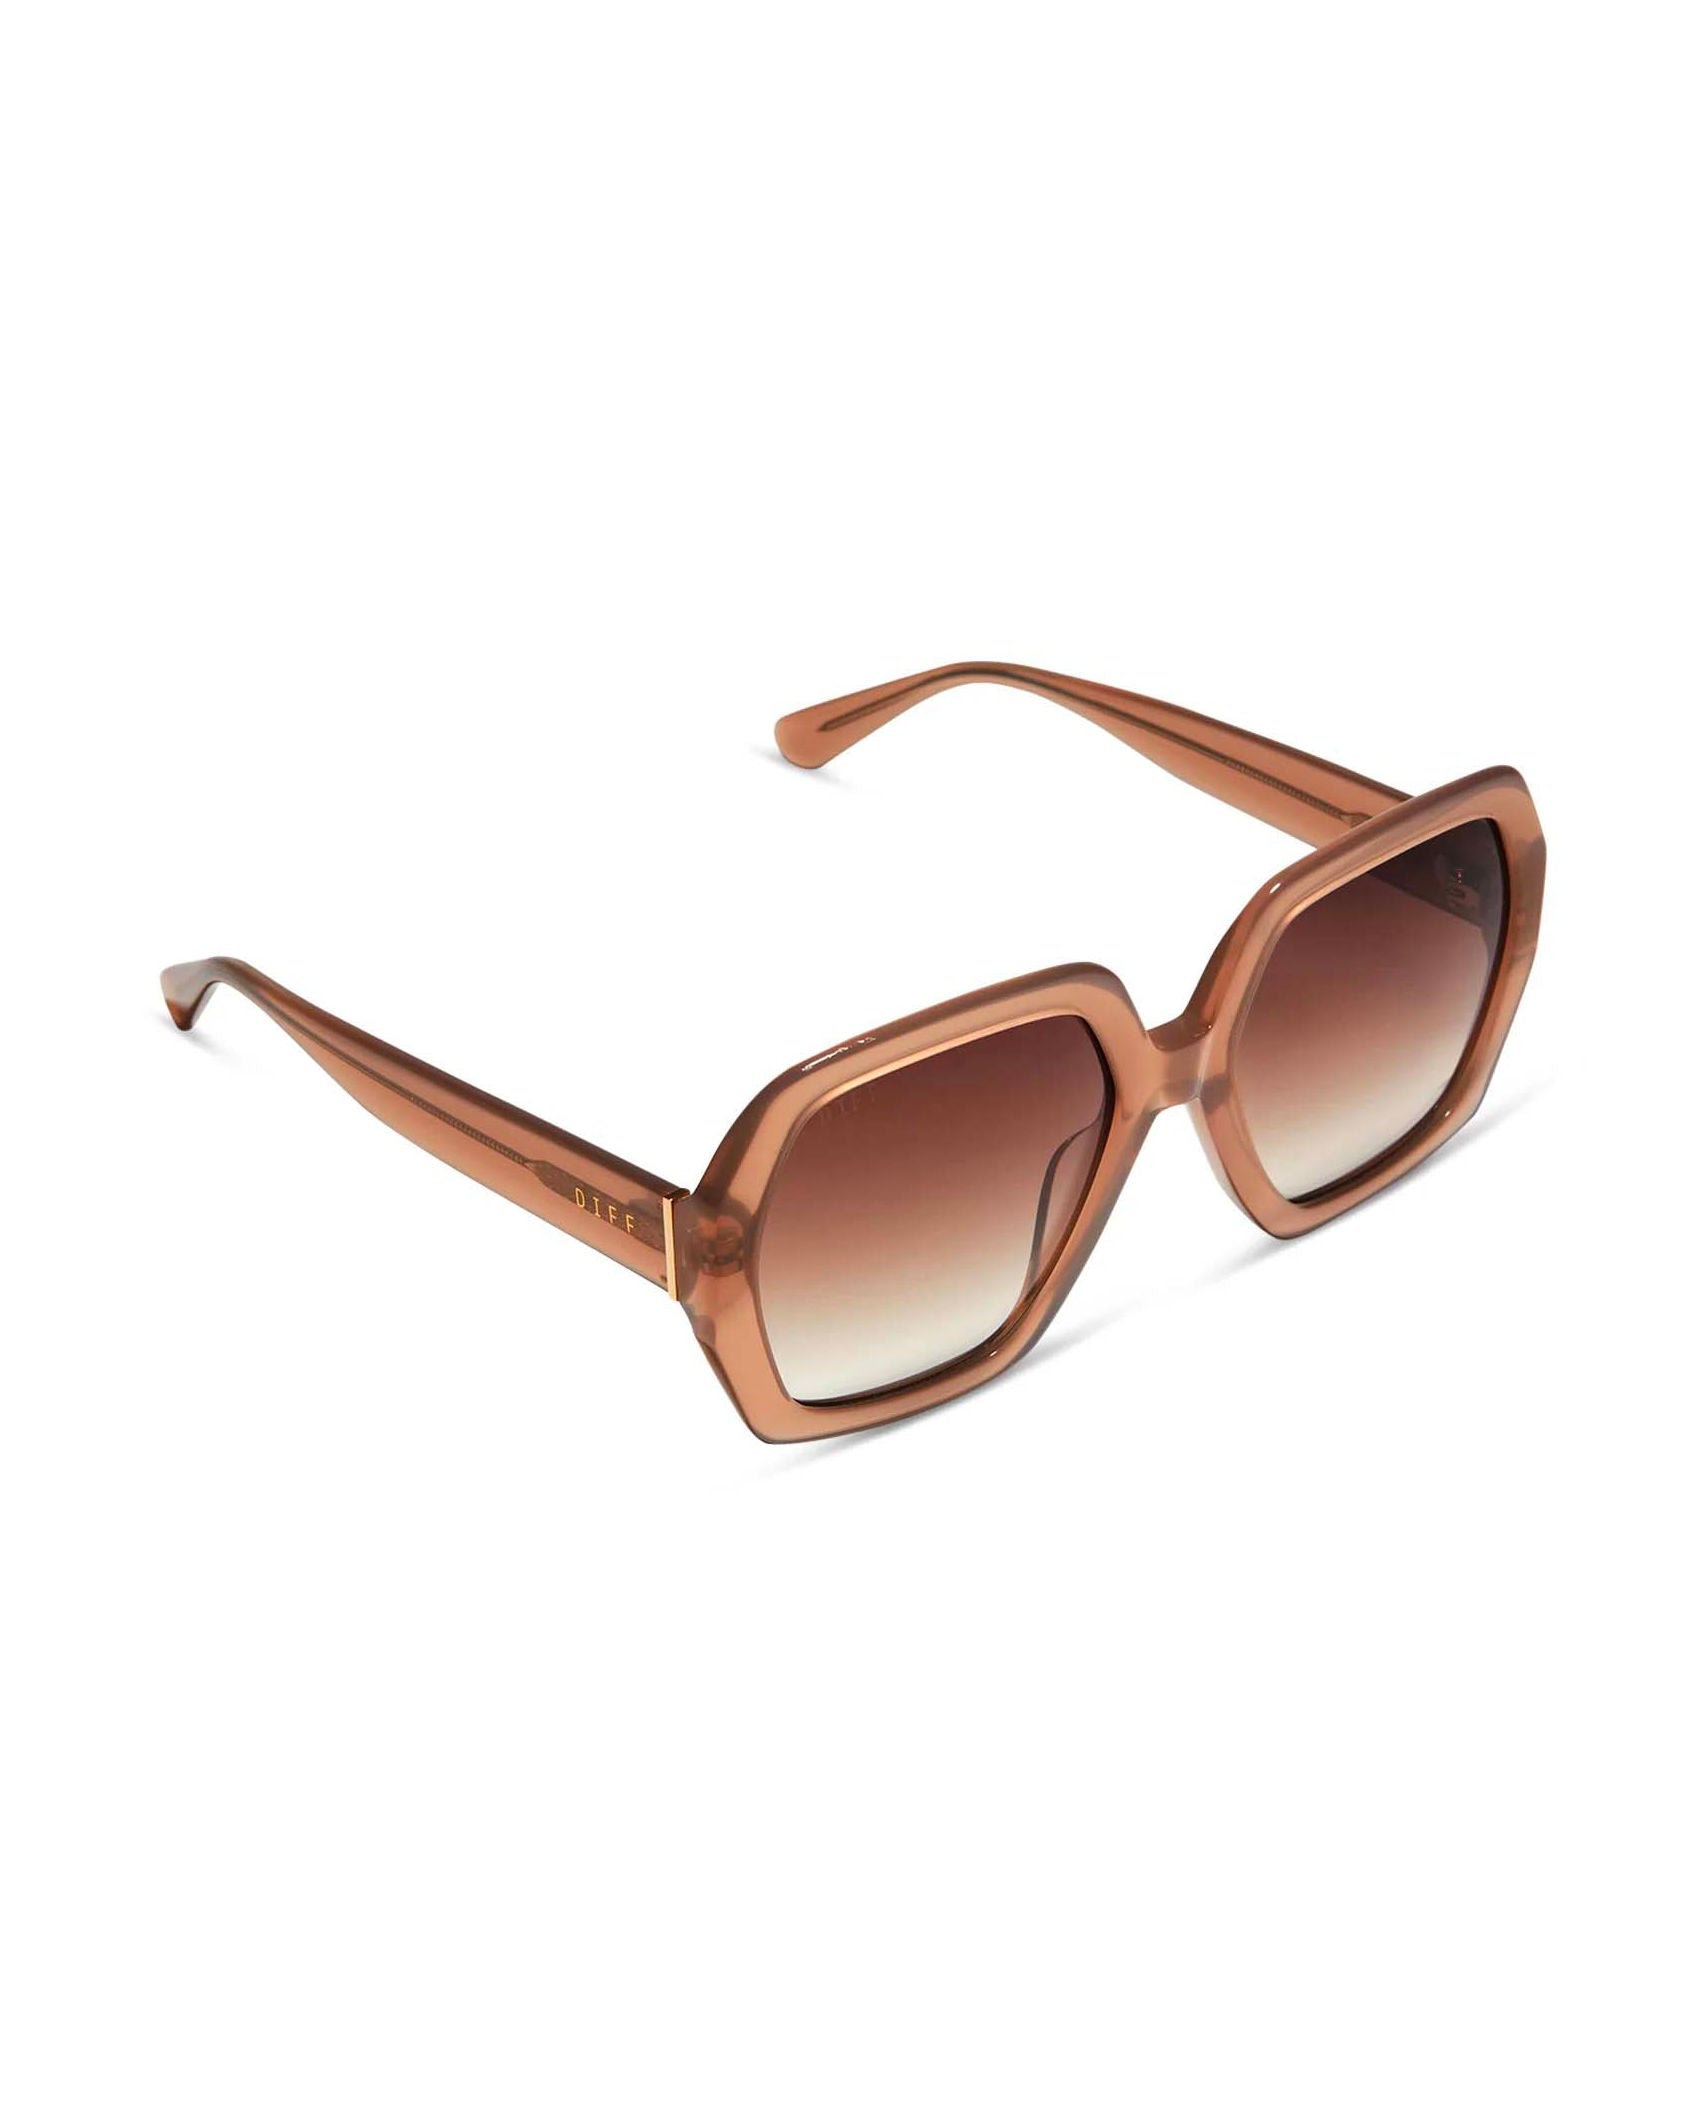 Nola Square Sunglasses Warm Taupe Brown Gradient